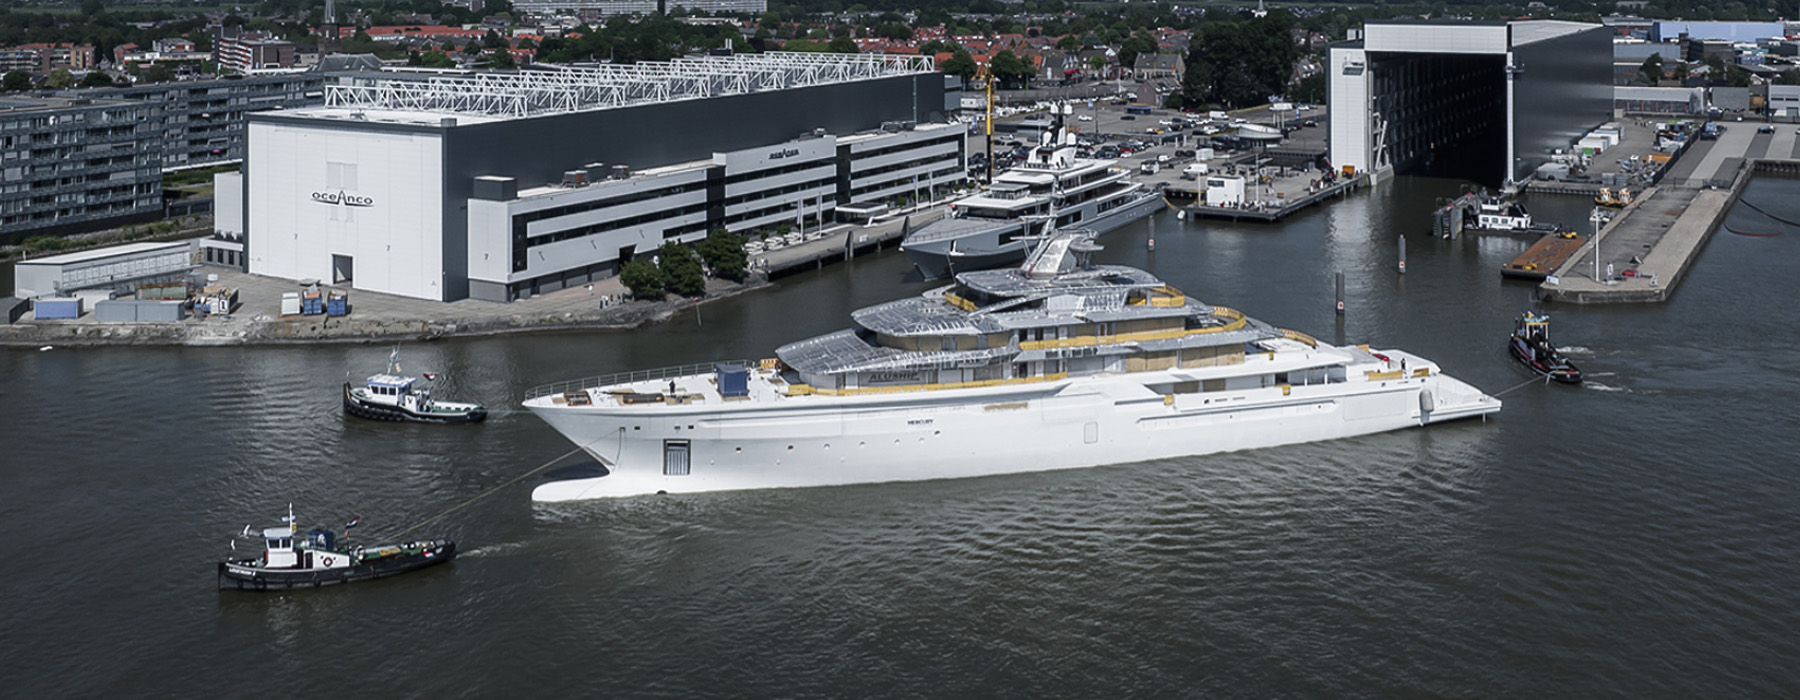 Oceanco Yachts for Sale - Dutch pedigree yachts